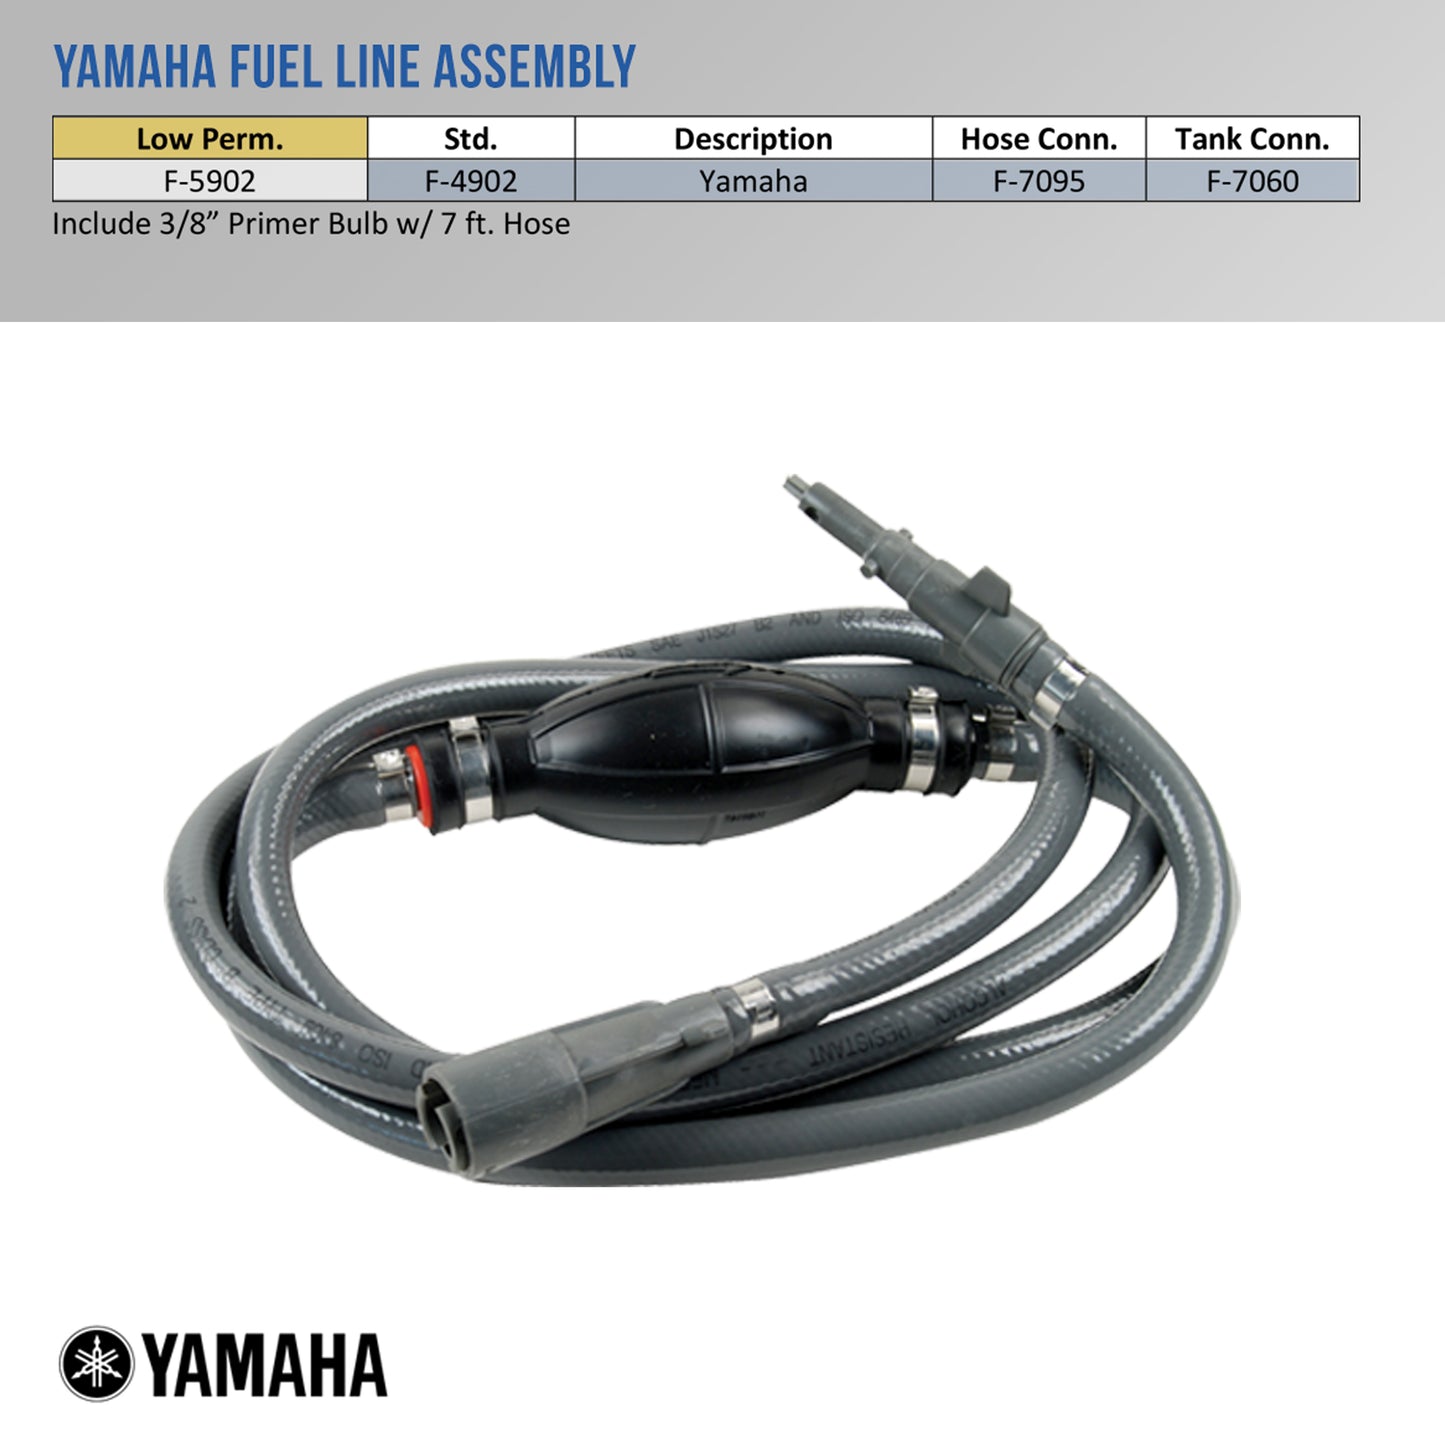 Yamaha Fuel Line Assembly - F-5902